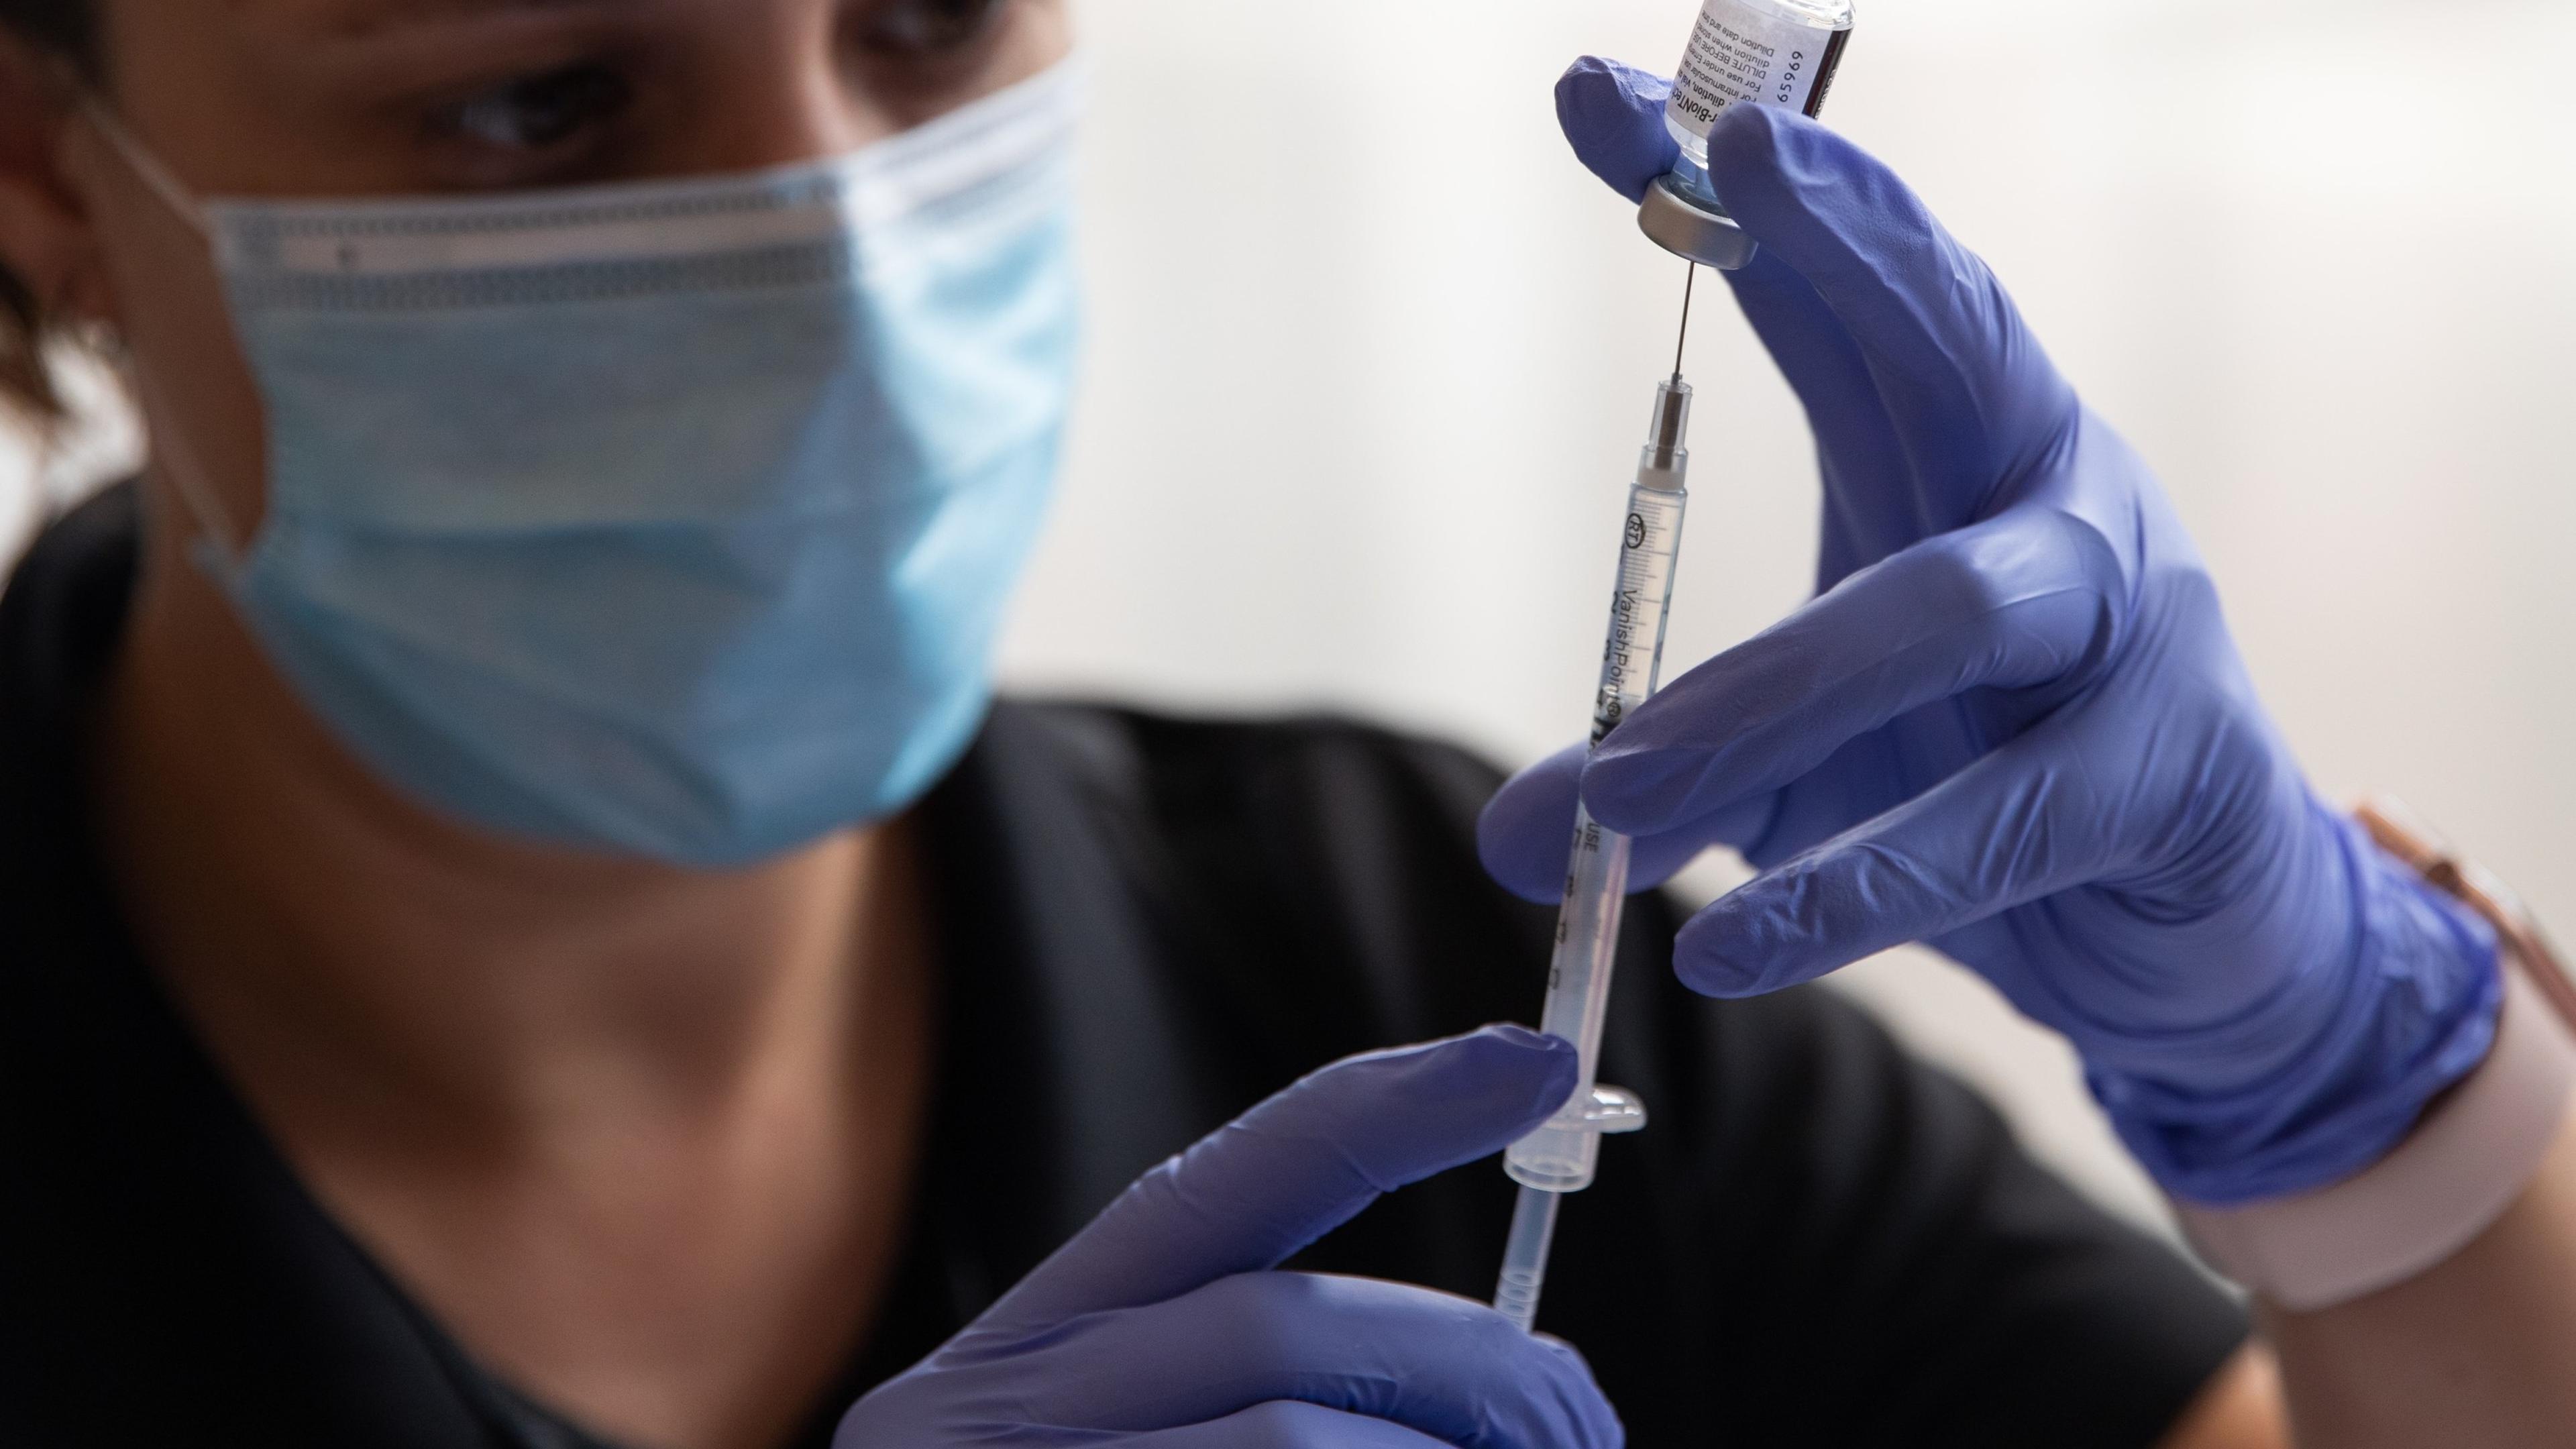 A healthcare worker prepares a Covid-19 vaccine